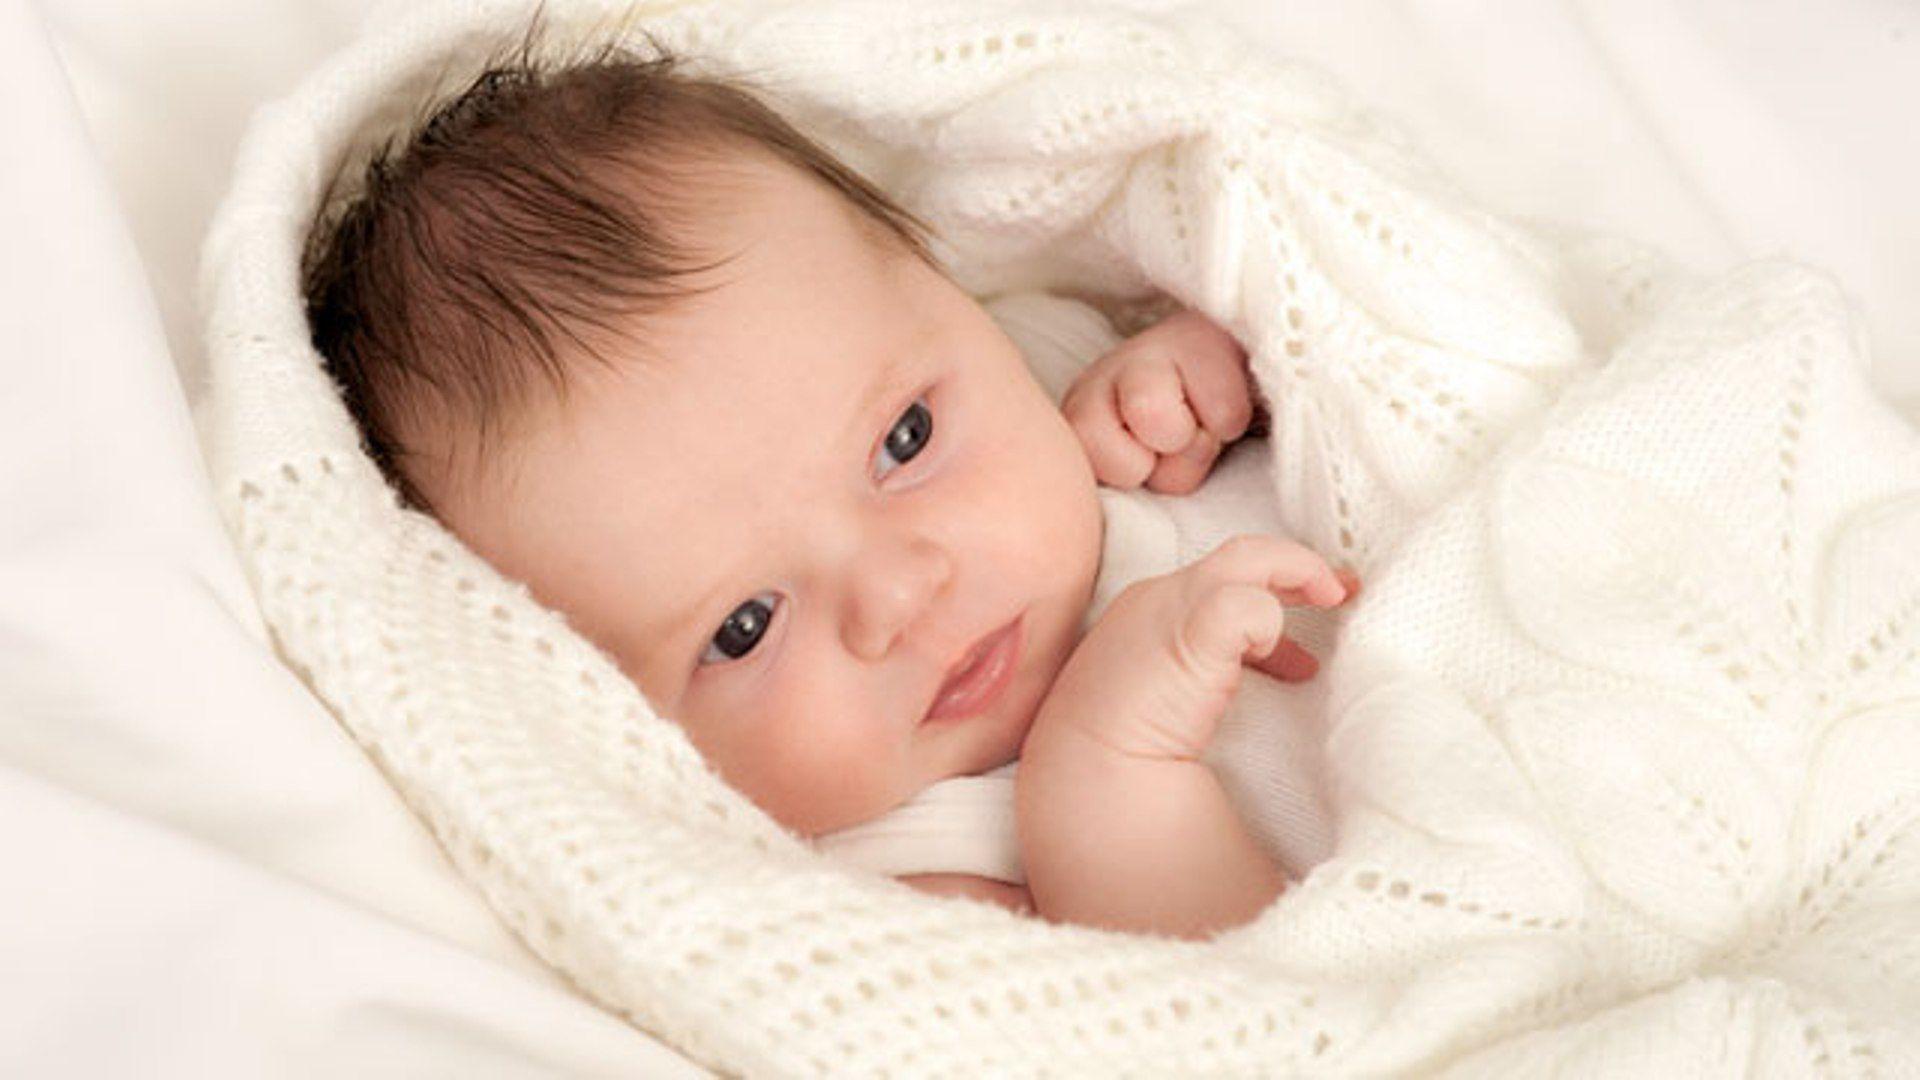 Cute Boy Baby Image HD Wallpaper Image Of Computer